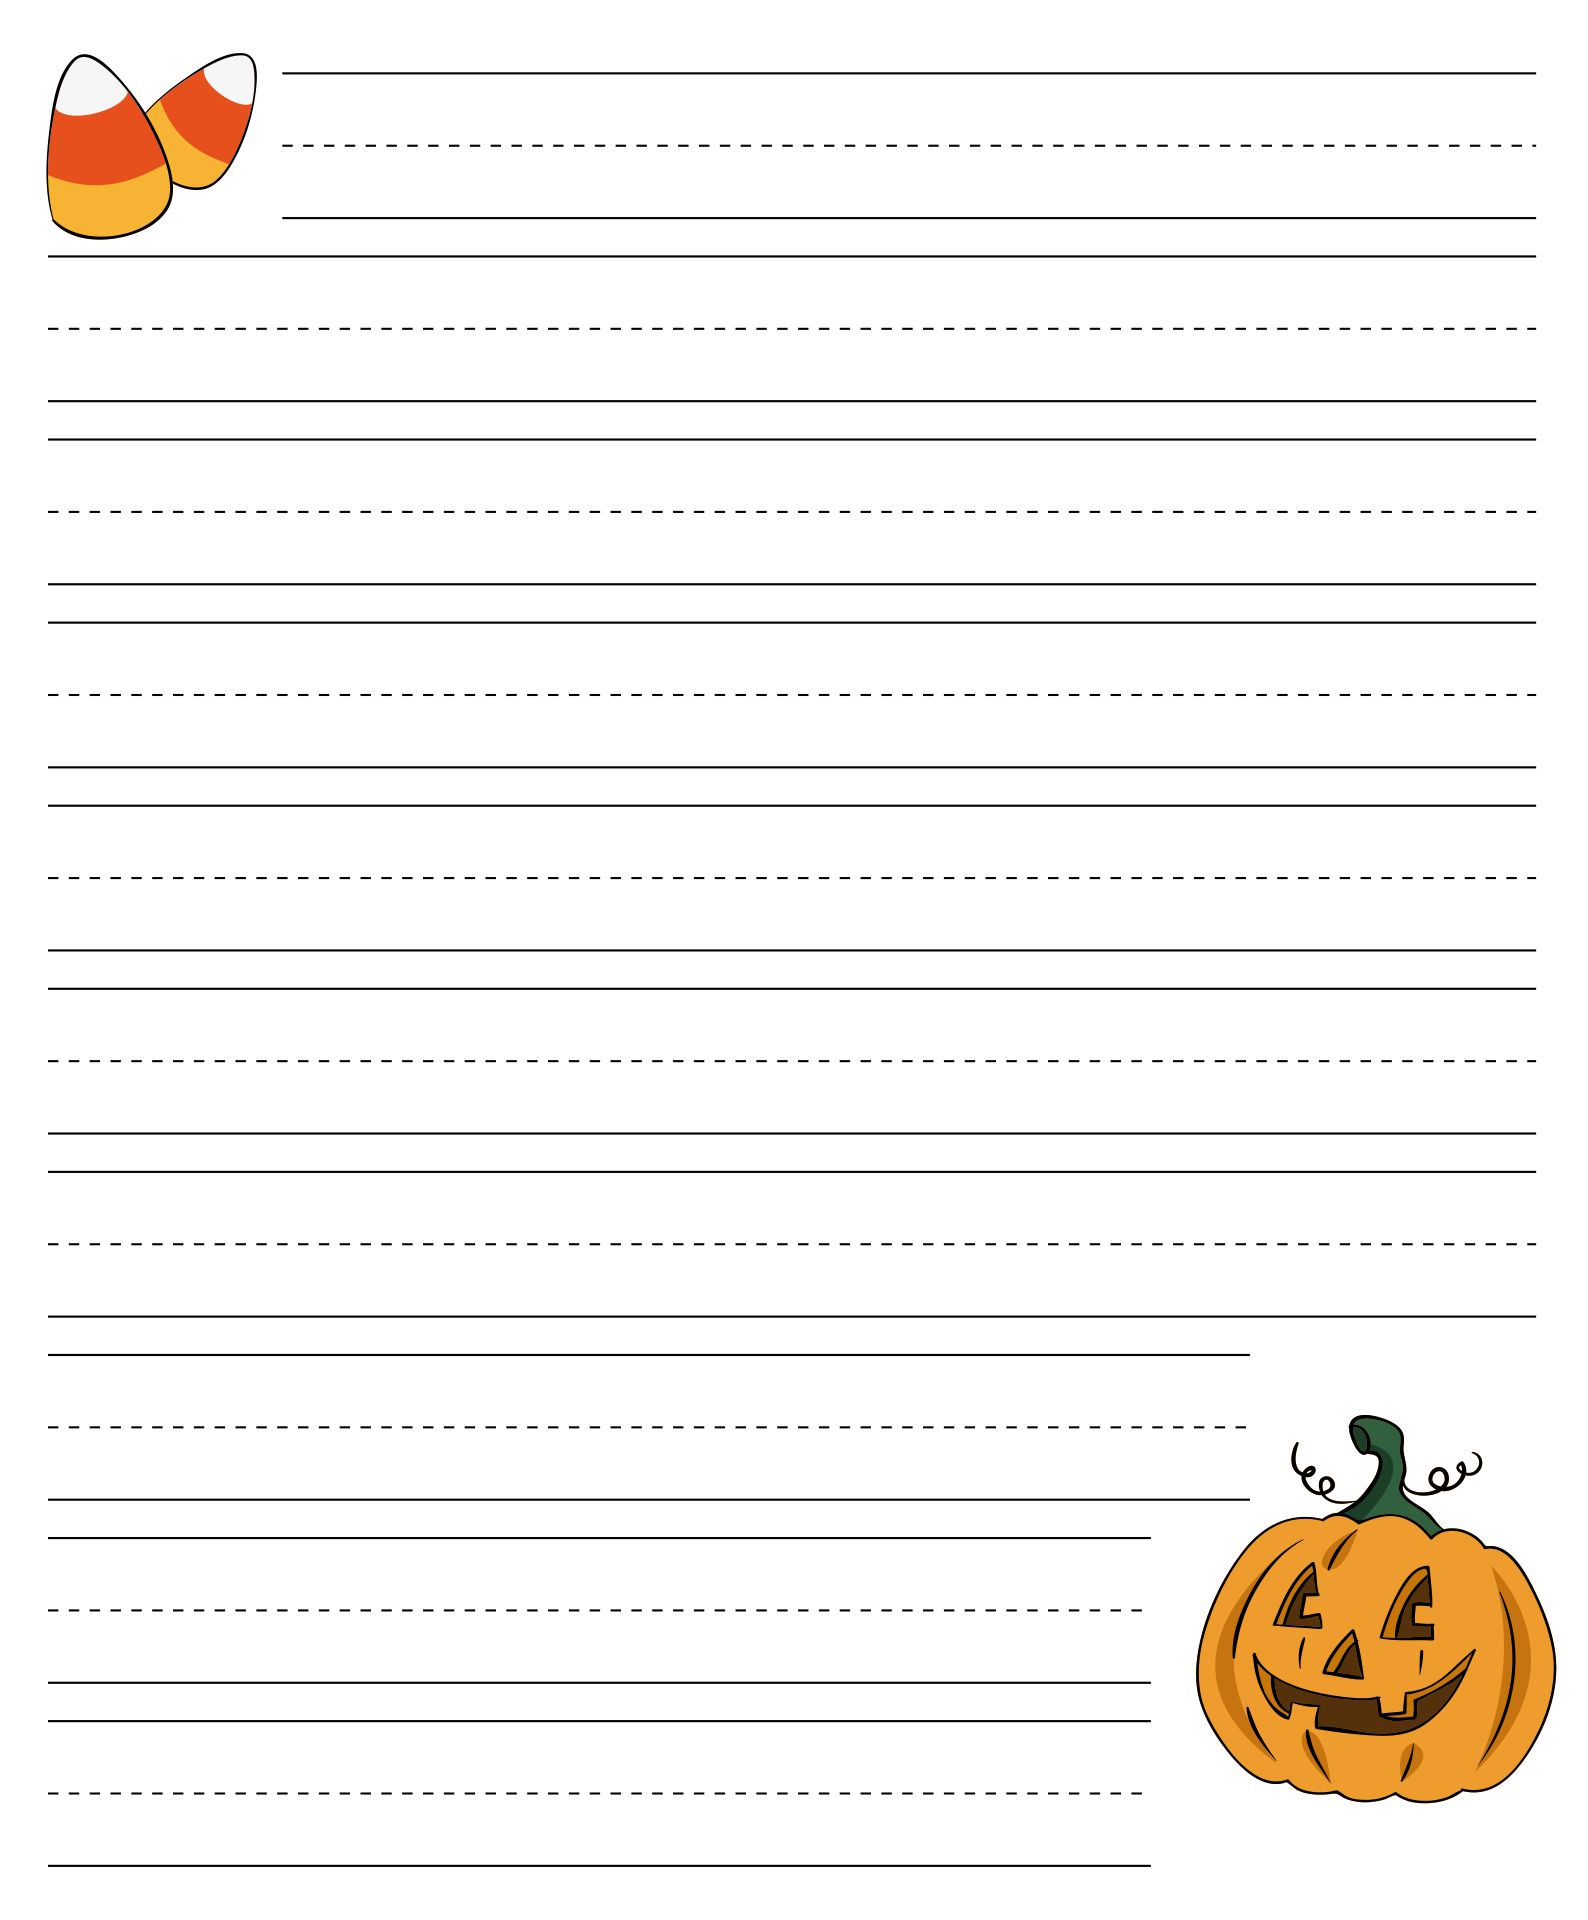 Halloween Writing Paper